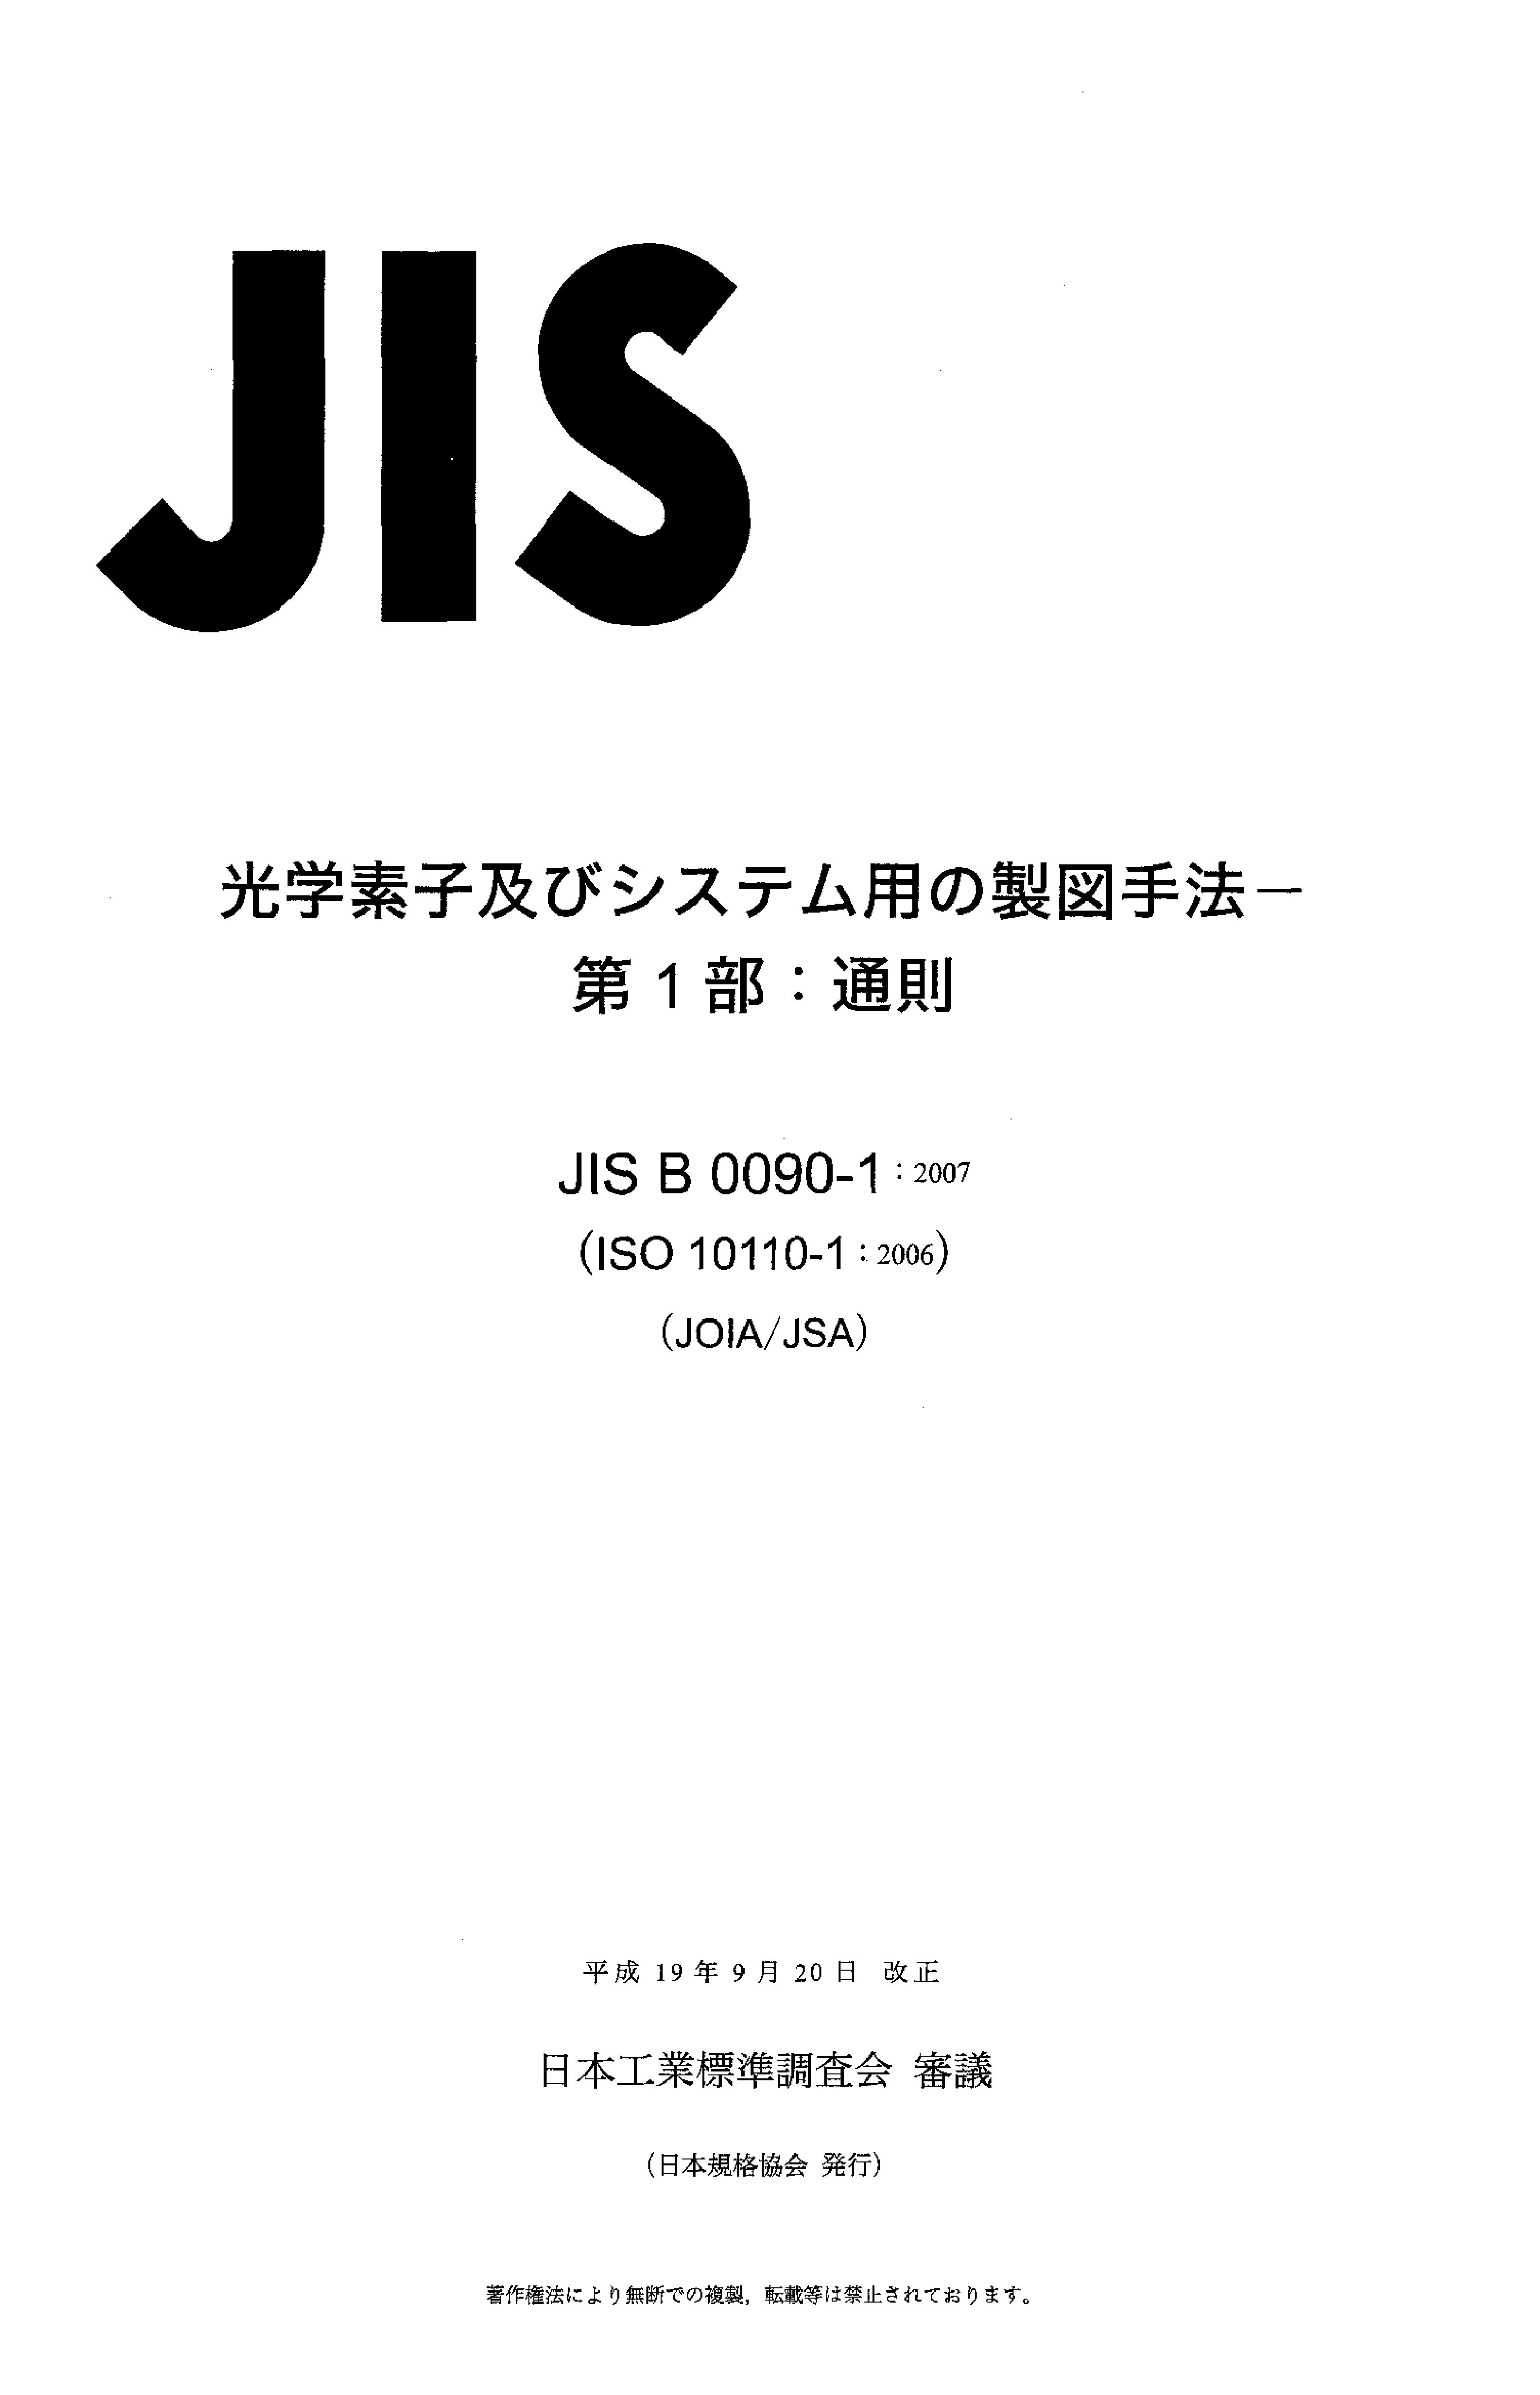 JIS B 0090-1:2007